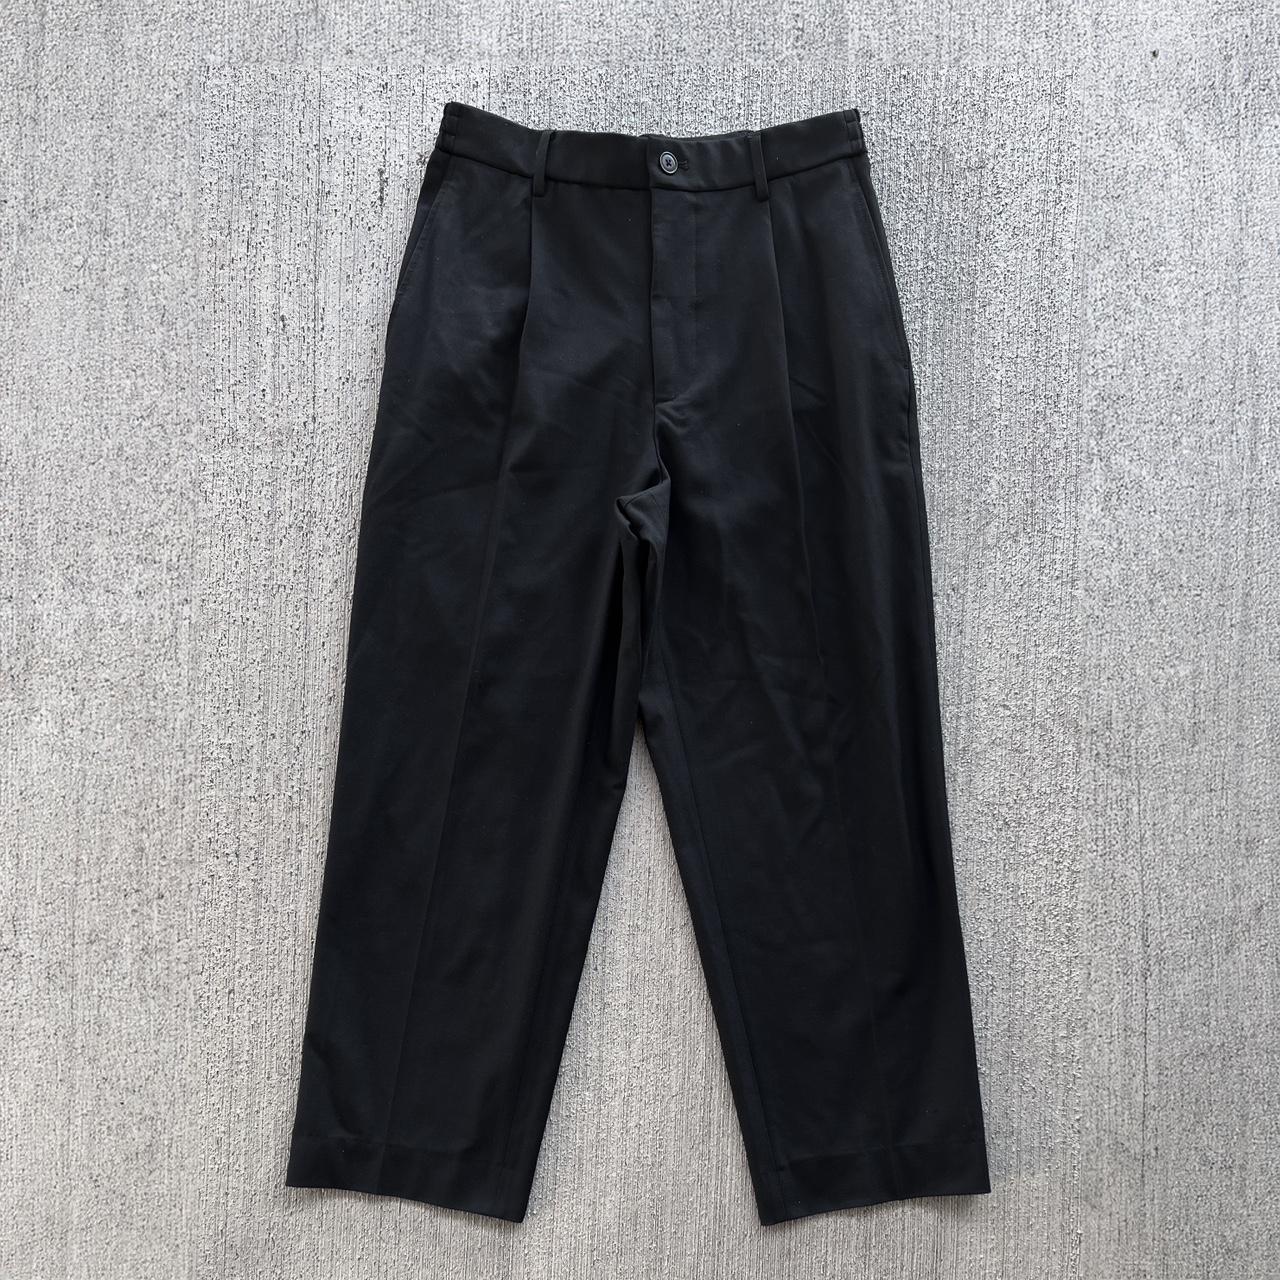 Black Uniqlo Pleated Pants Stretch waist 30-32 27”... - Depop